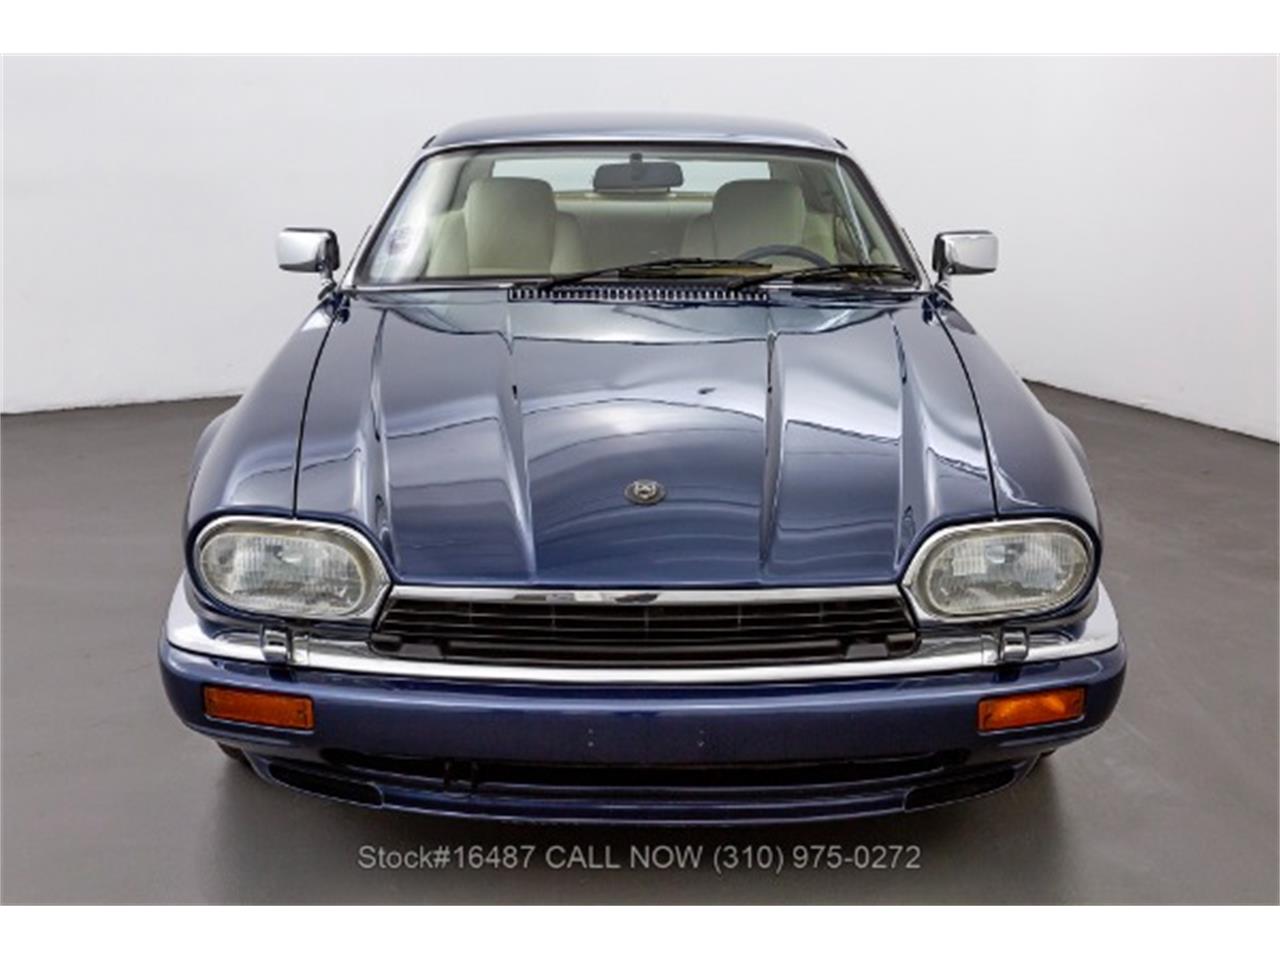 For Sale: 1995 Jaguar XJS in Beverly Hills, California for sale in Beverly Hills, CA